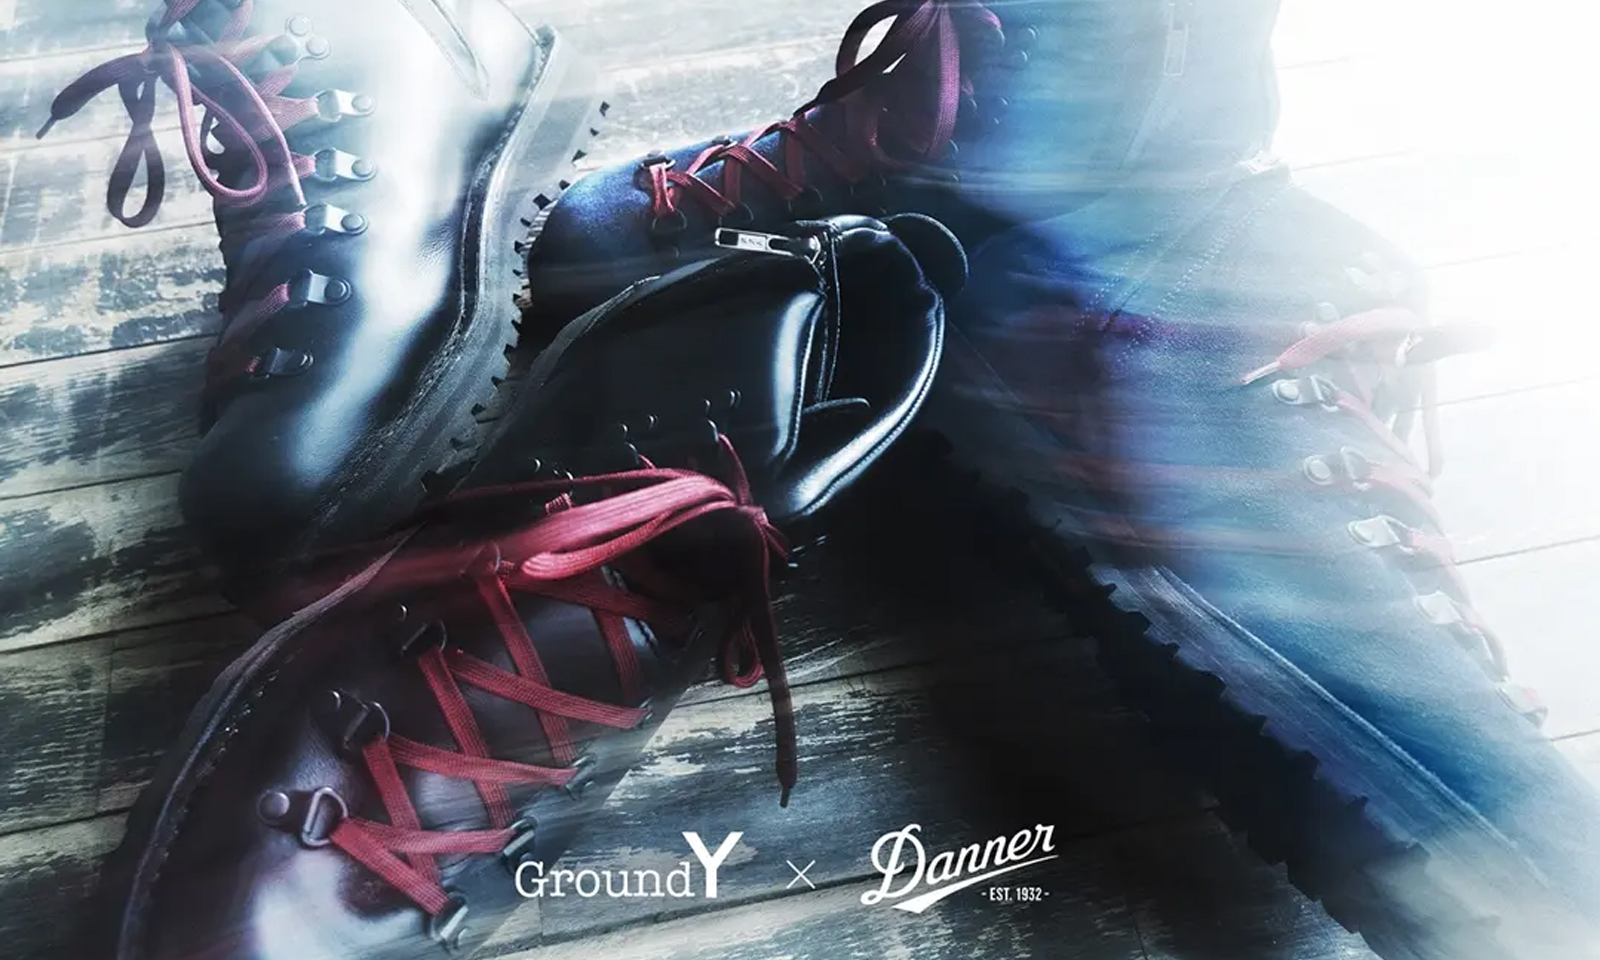 Ground Y x DANNER 合作鞋款发布